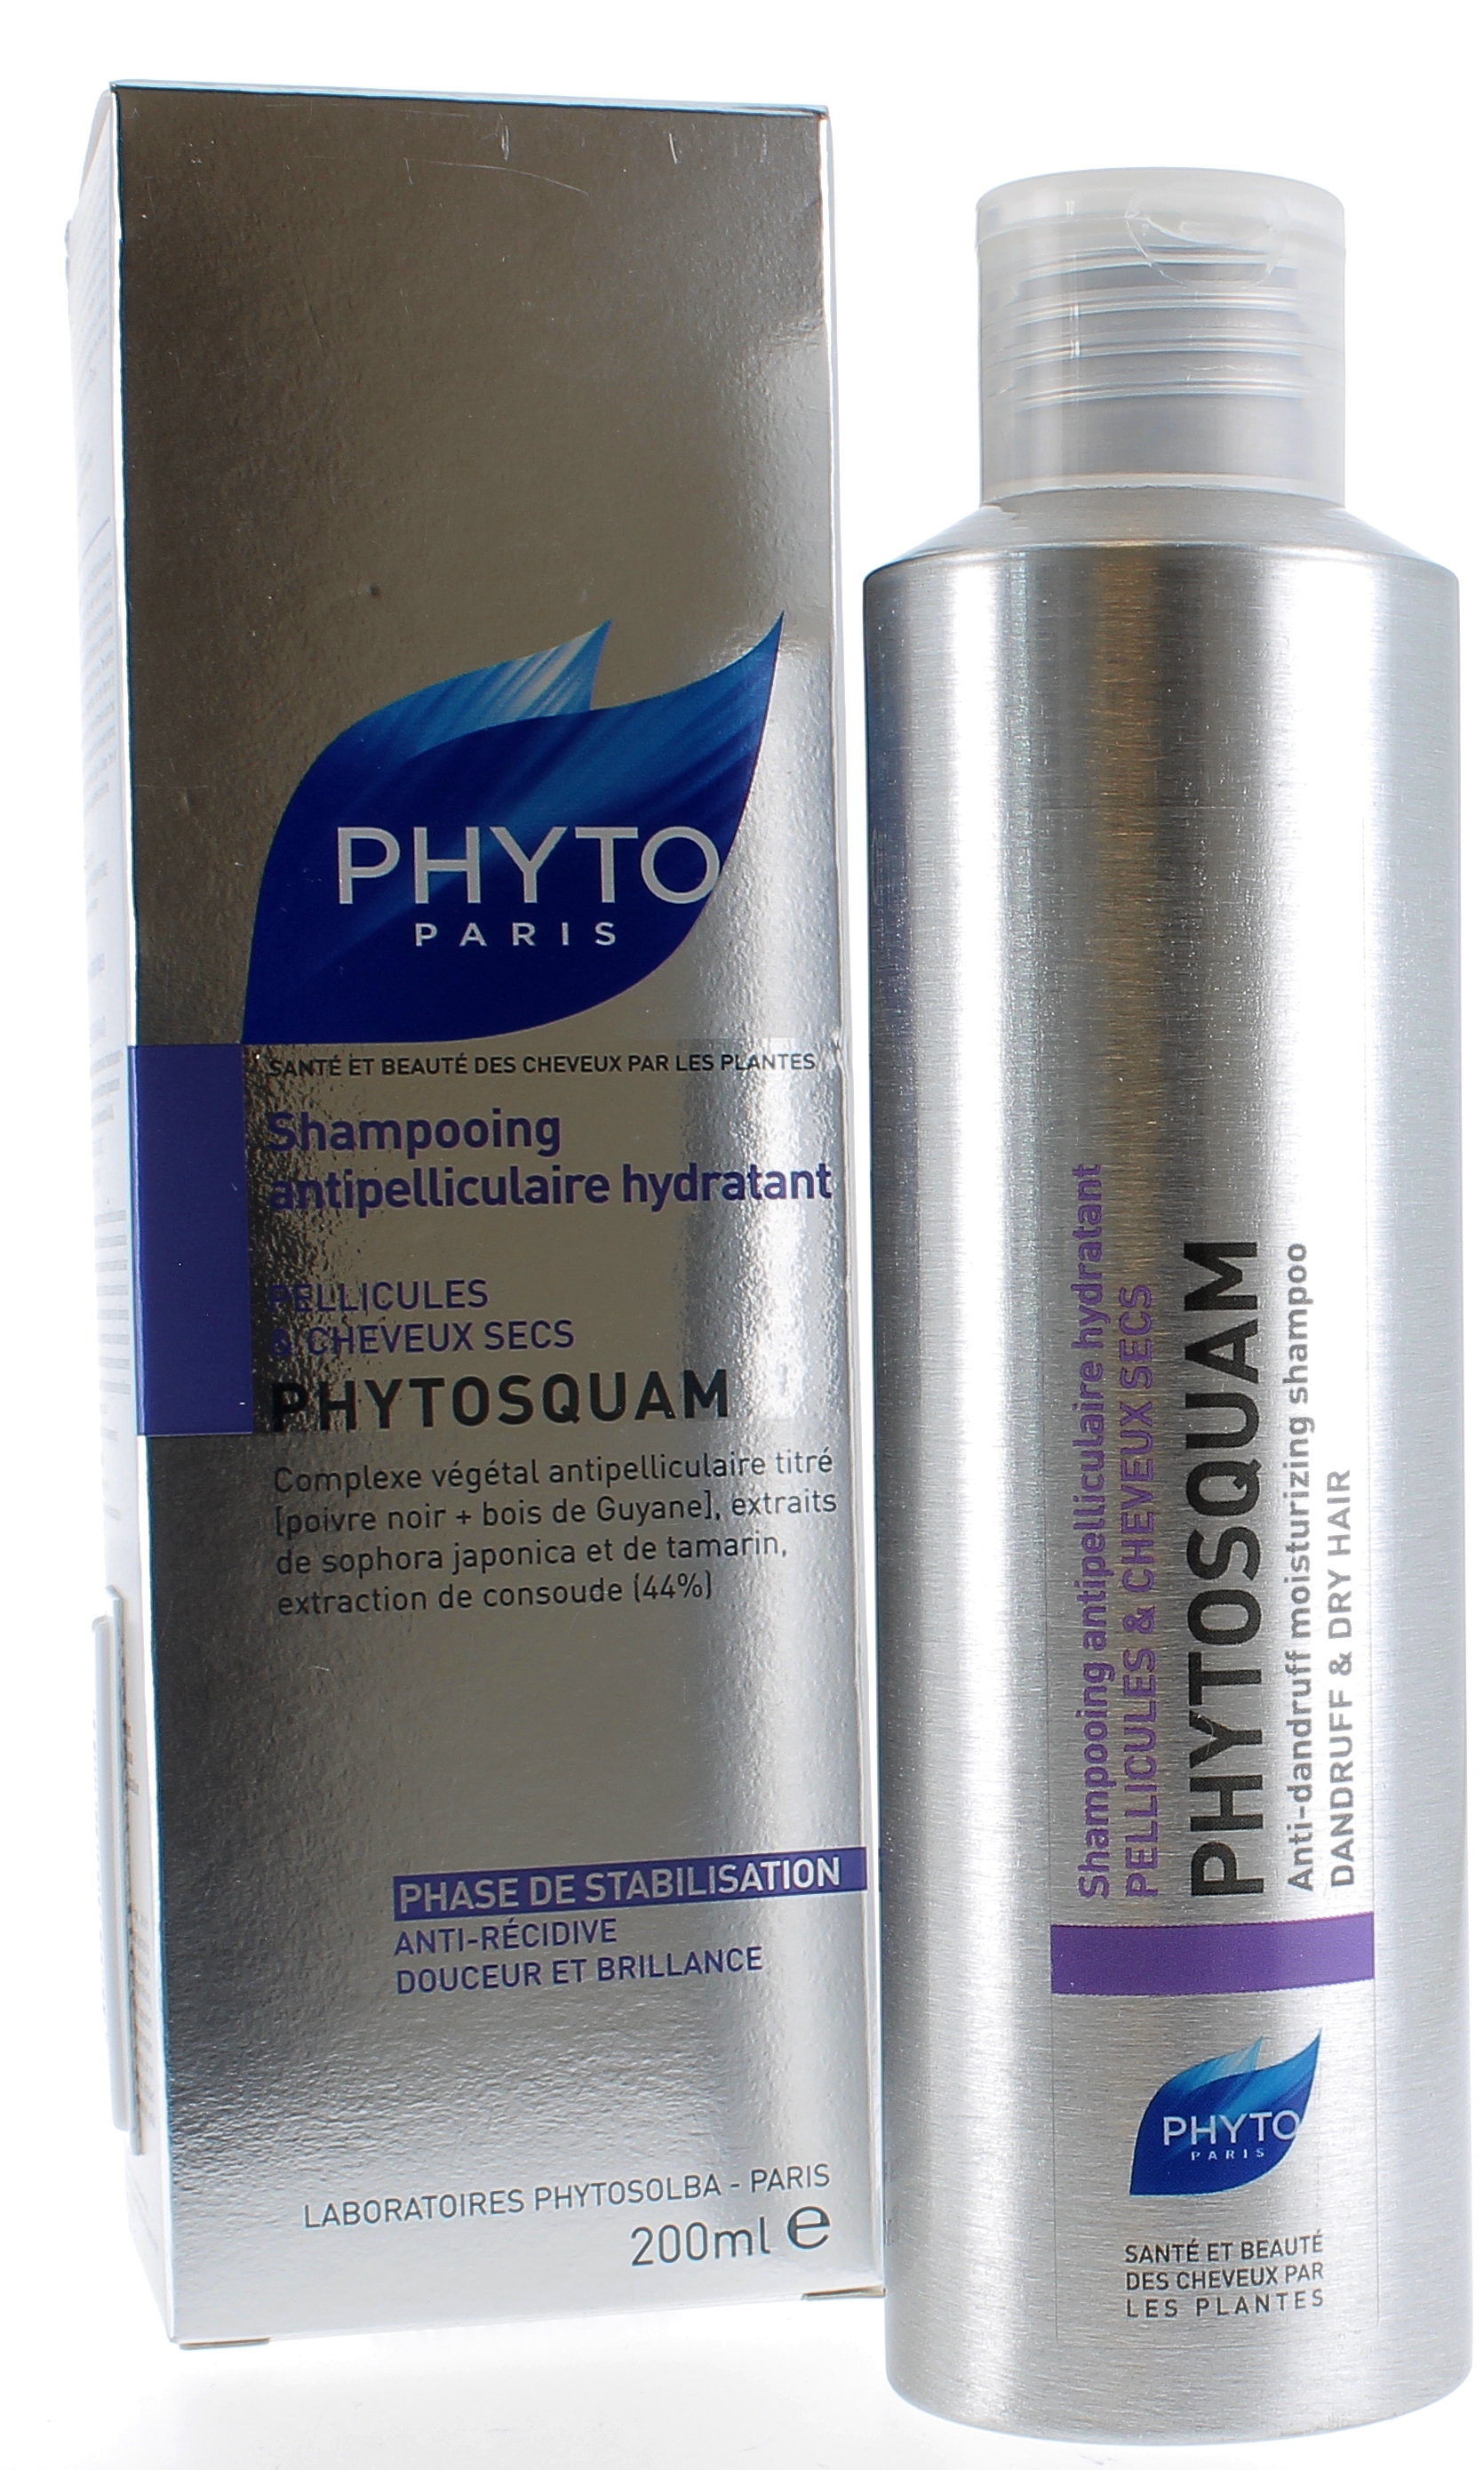 Phytosquam shampooing antipelliculaire hydratant Phyto Paris - flacon de 200 ml